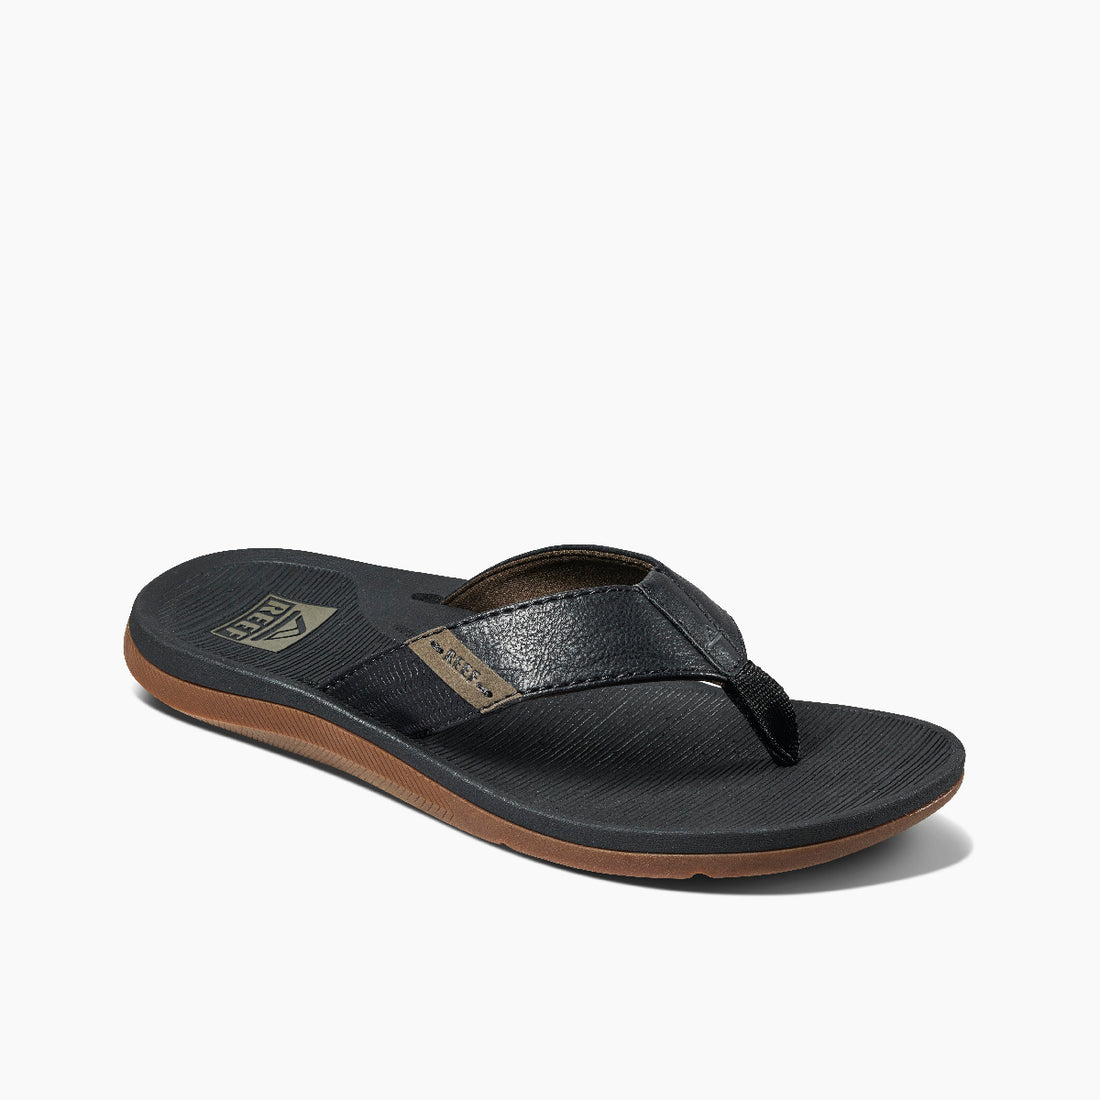 REEF Men's Santa Ana Flip Flop Sandals Black - CI4650 BLACK - BLACK, 9